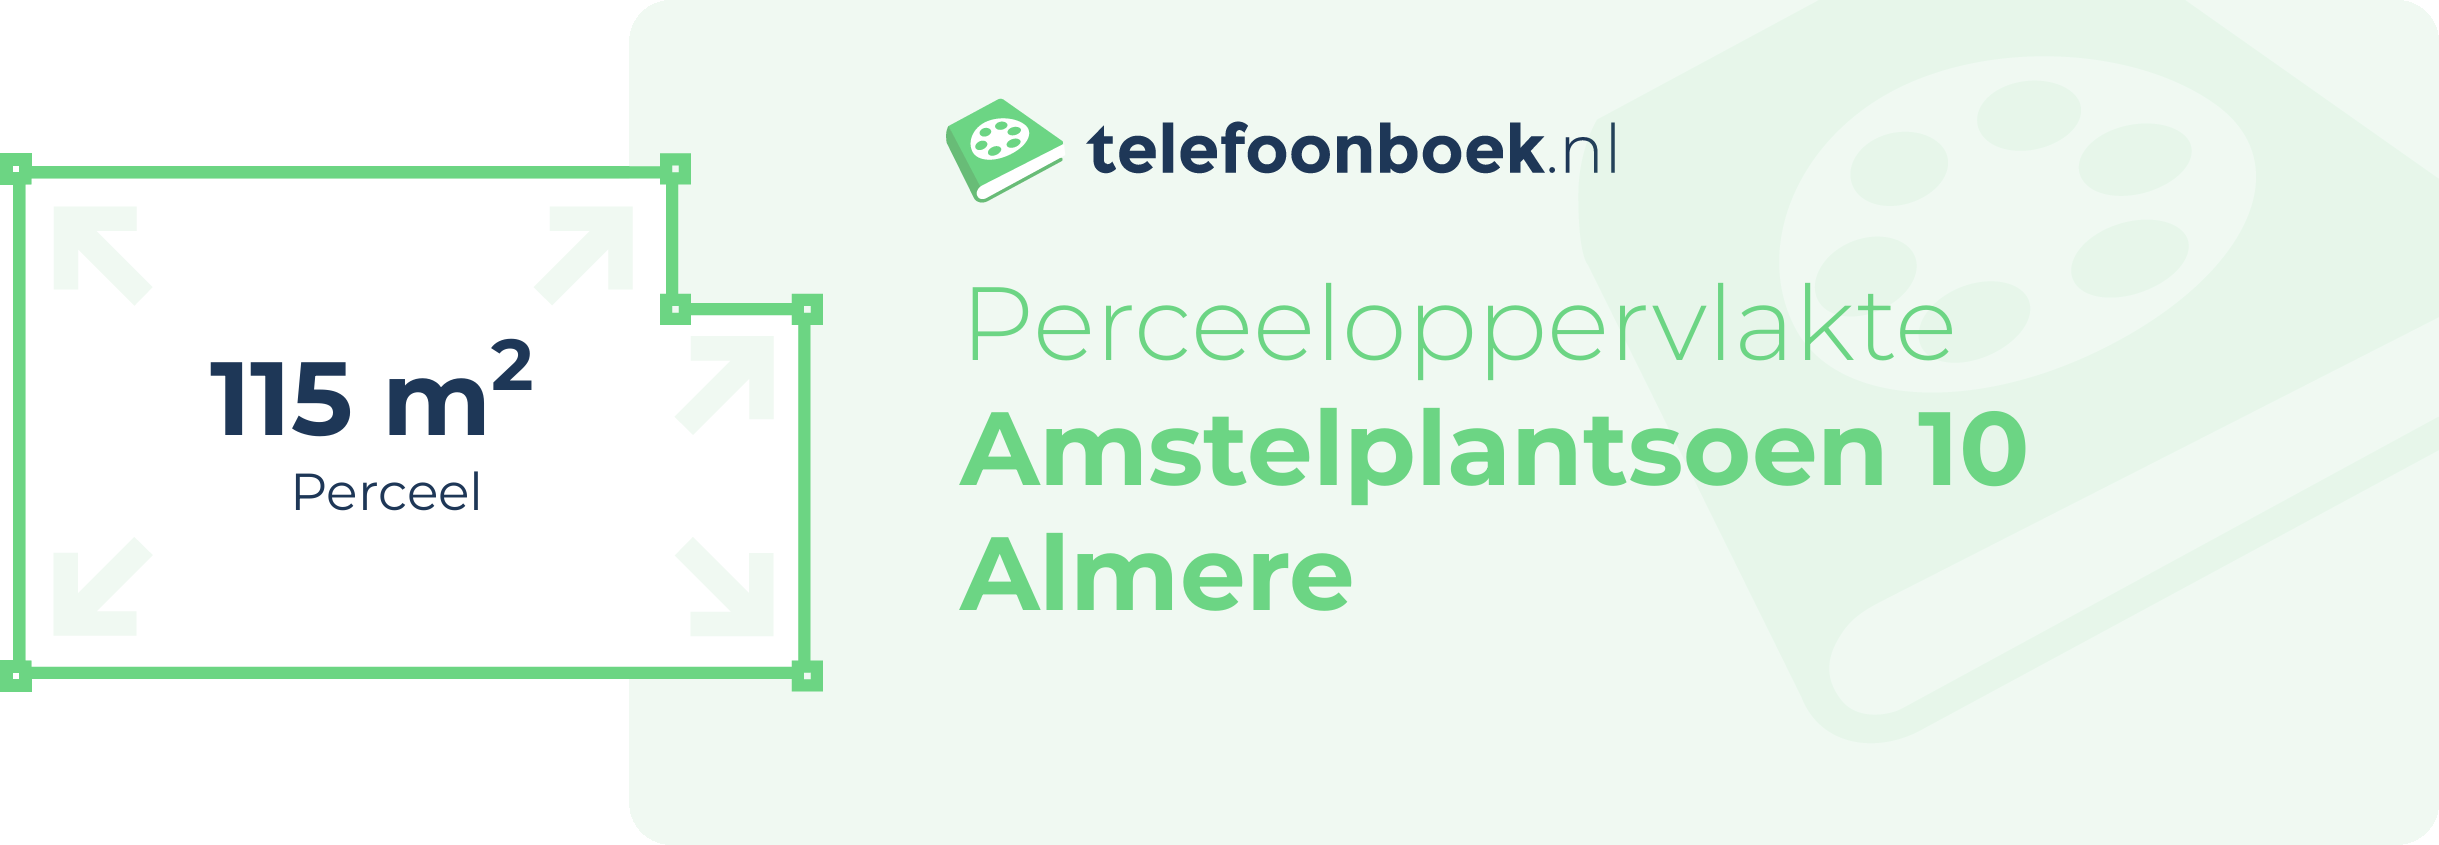 Perceeloppervlakte Amstelplantsoen 10 Almere